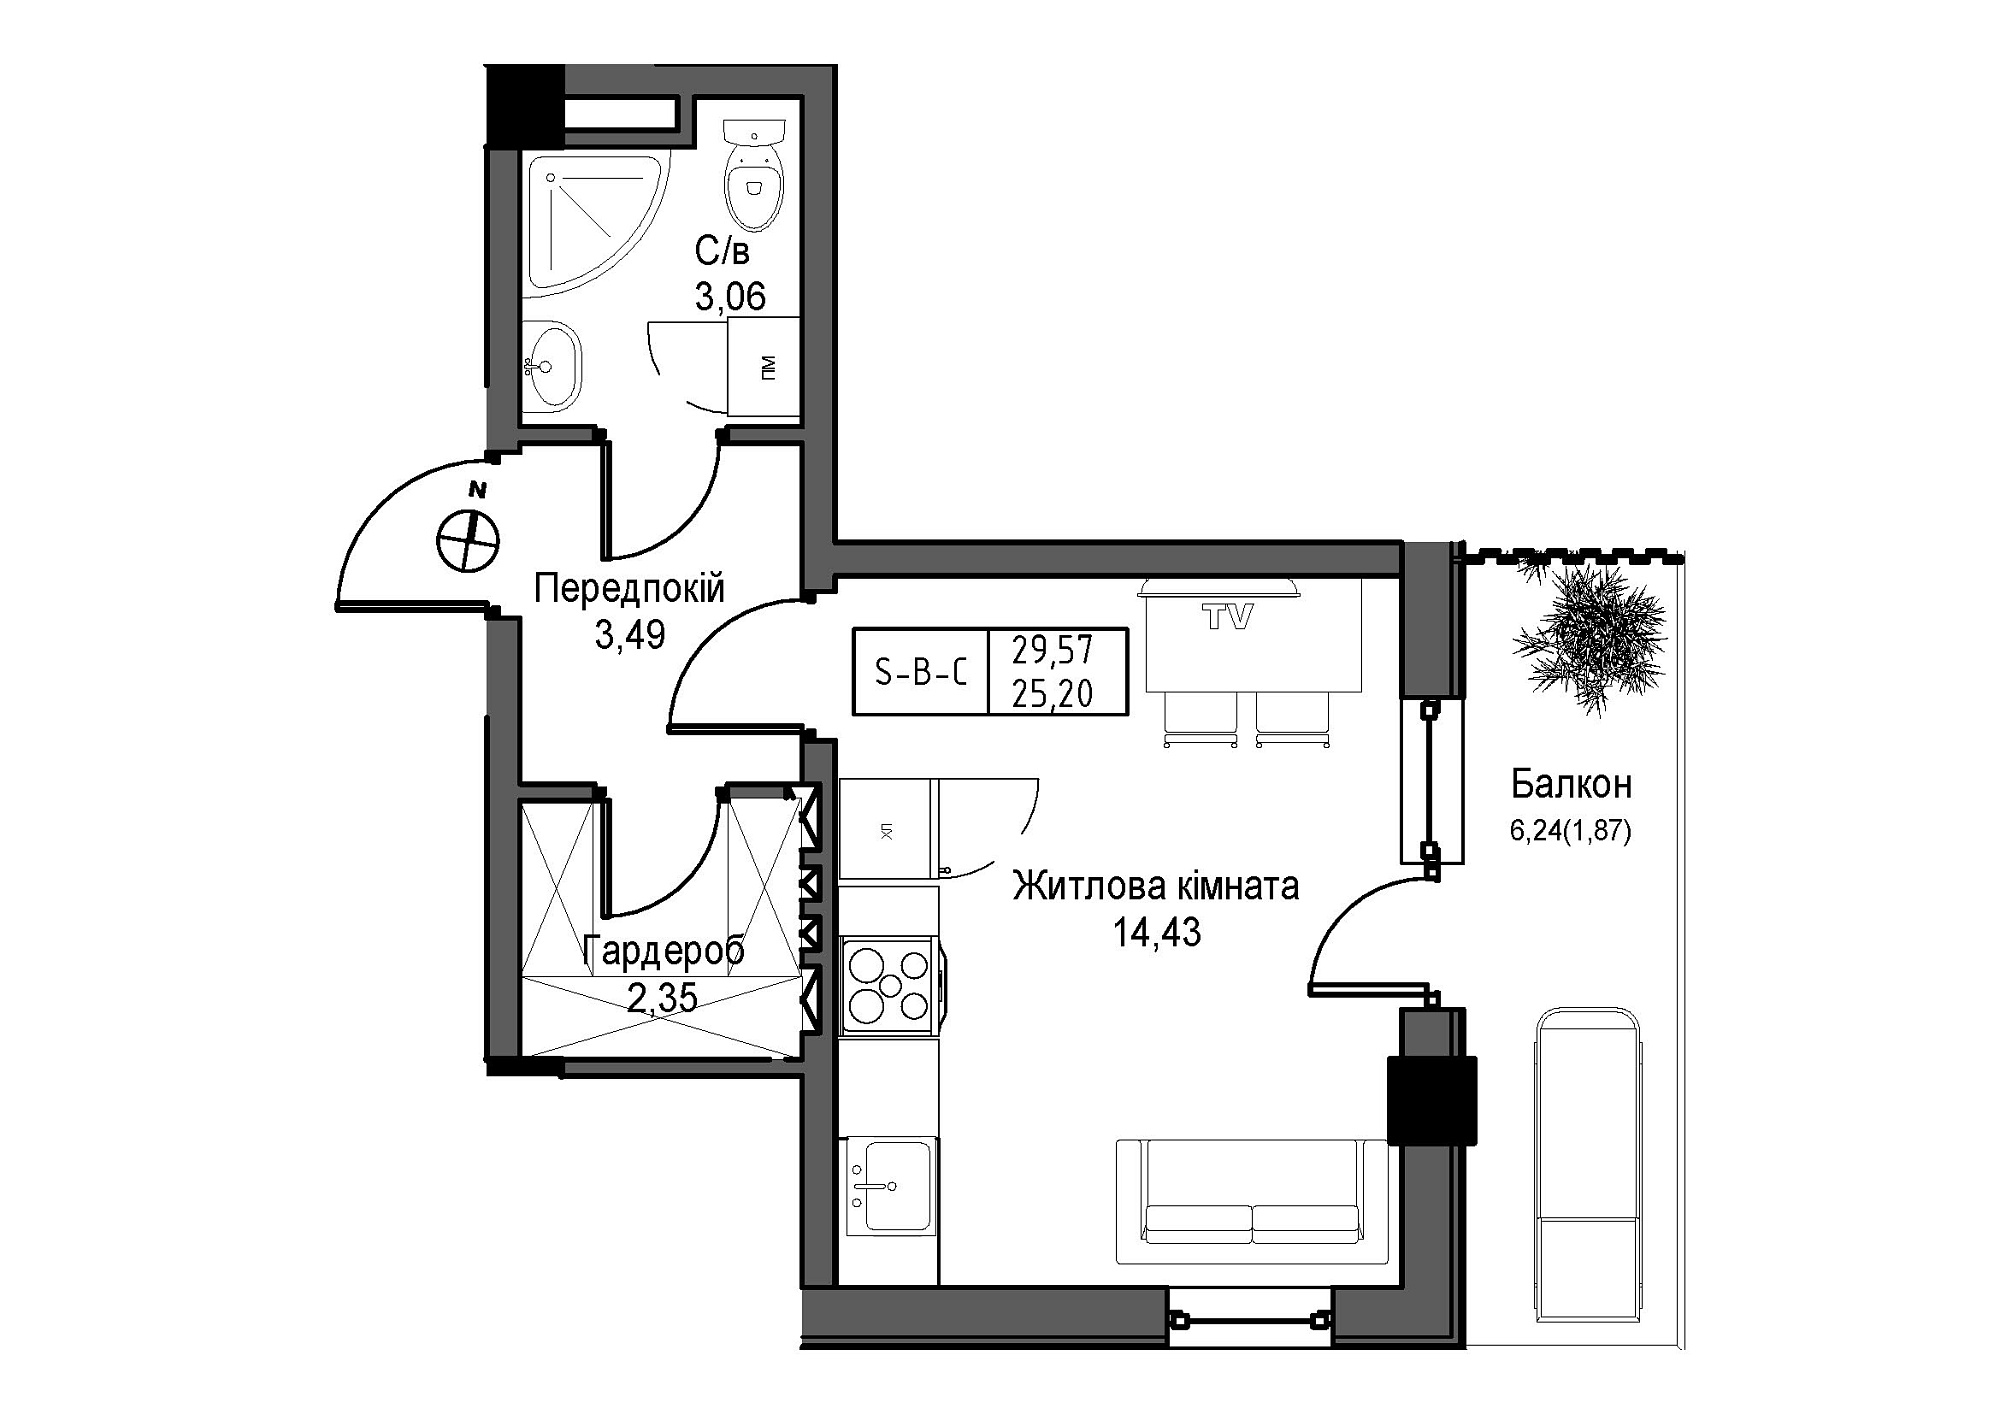 Планування Smart-квартира площею 25.2м2, UM-007-09/0008.